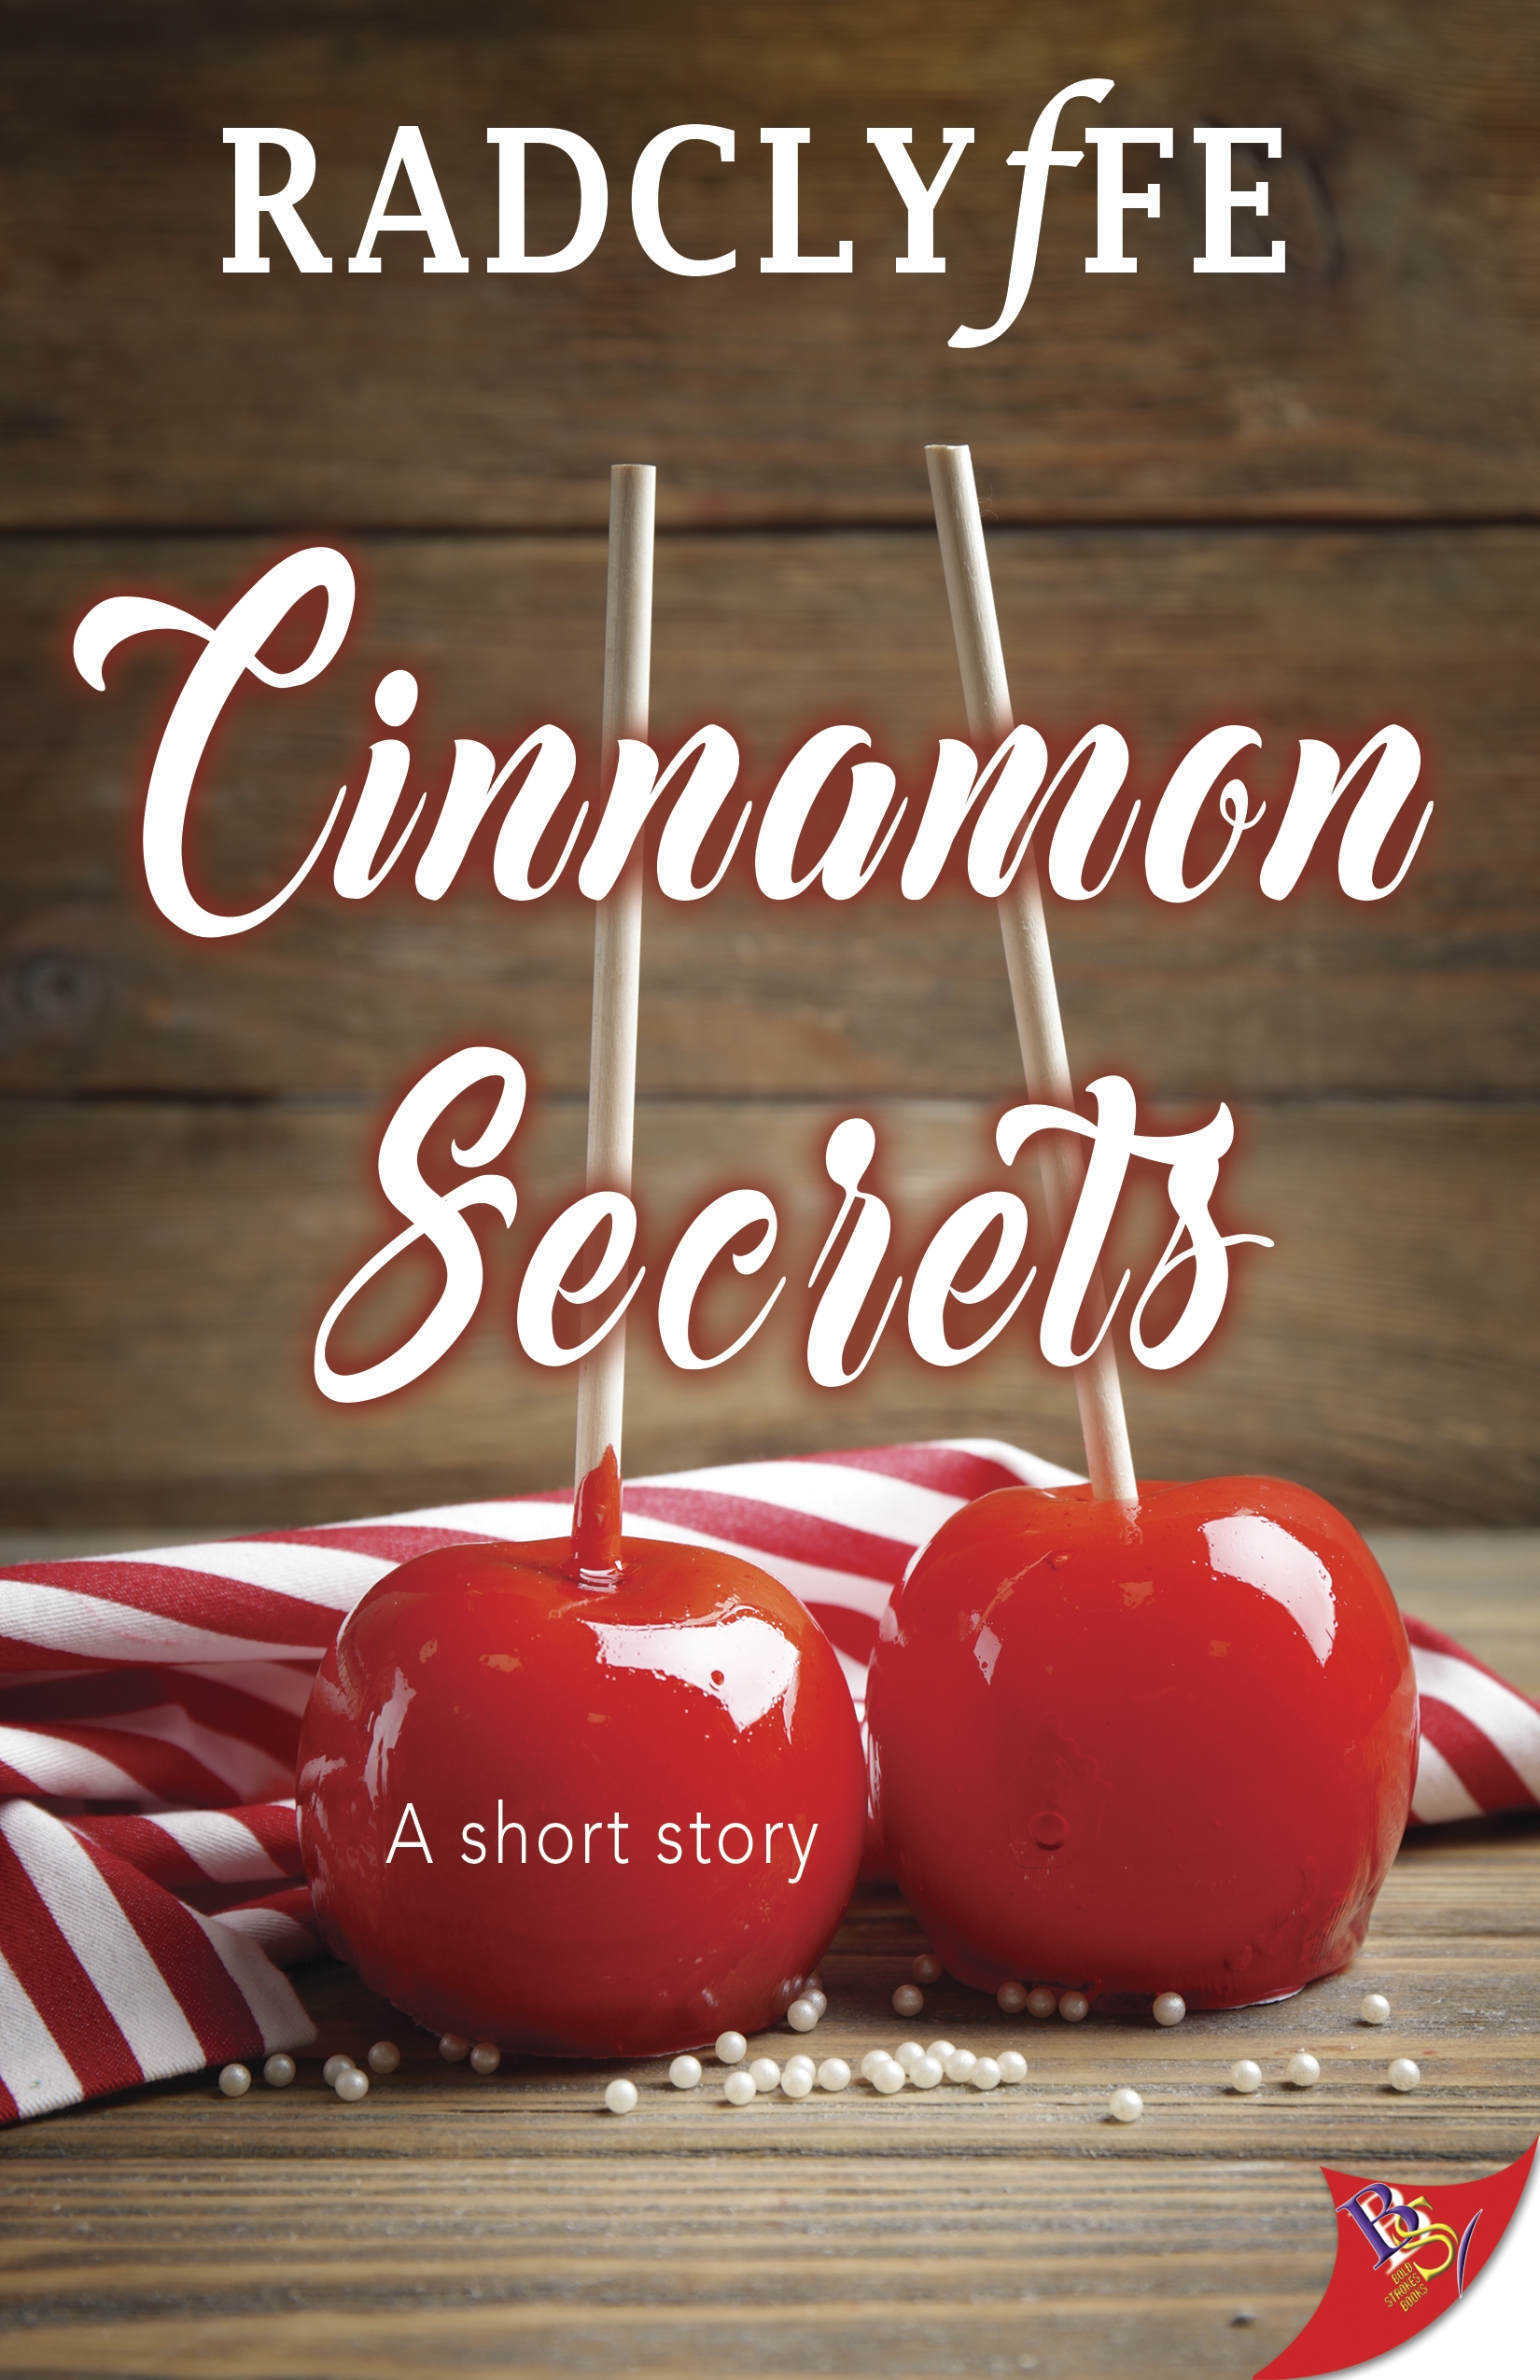 Cinnamon Secrets